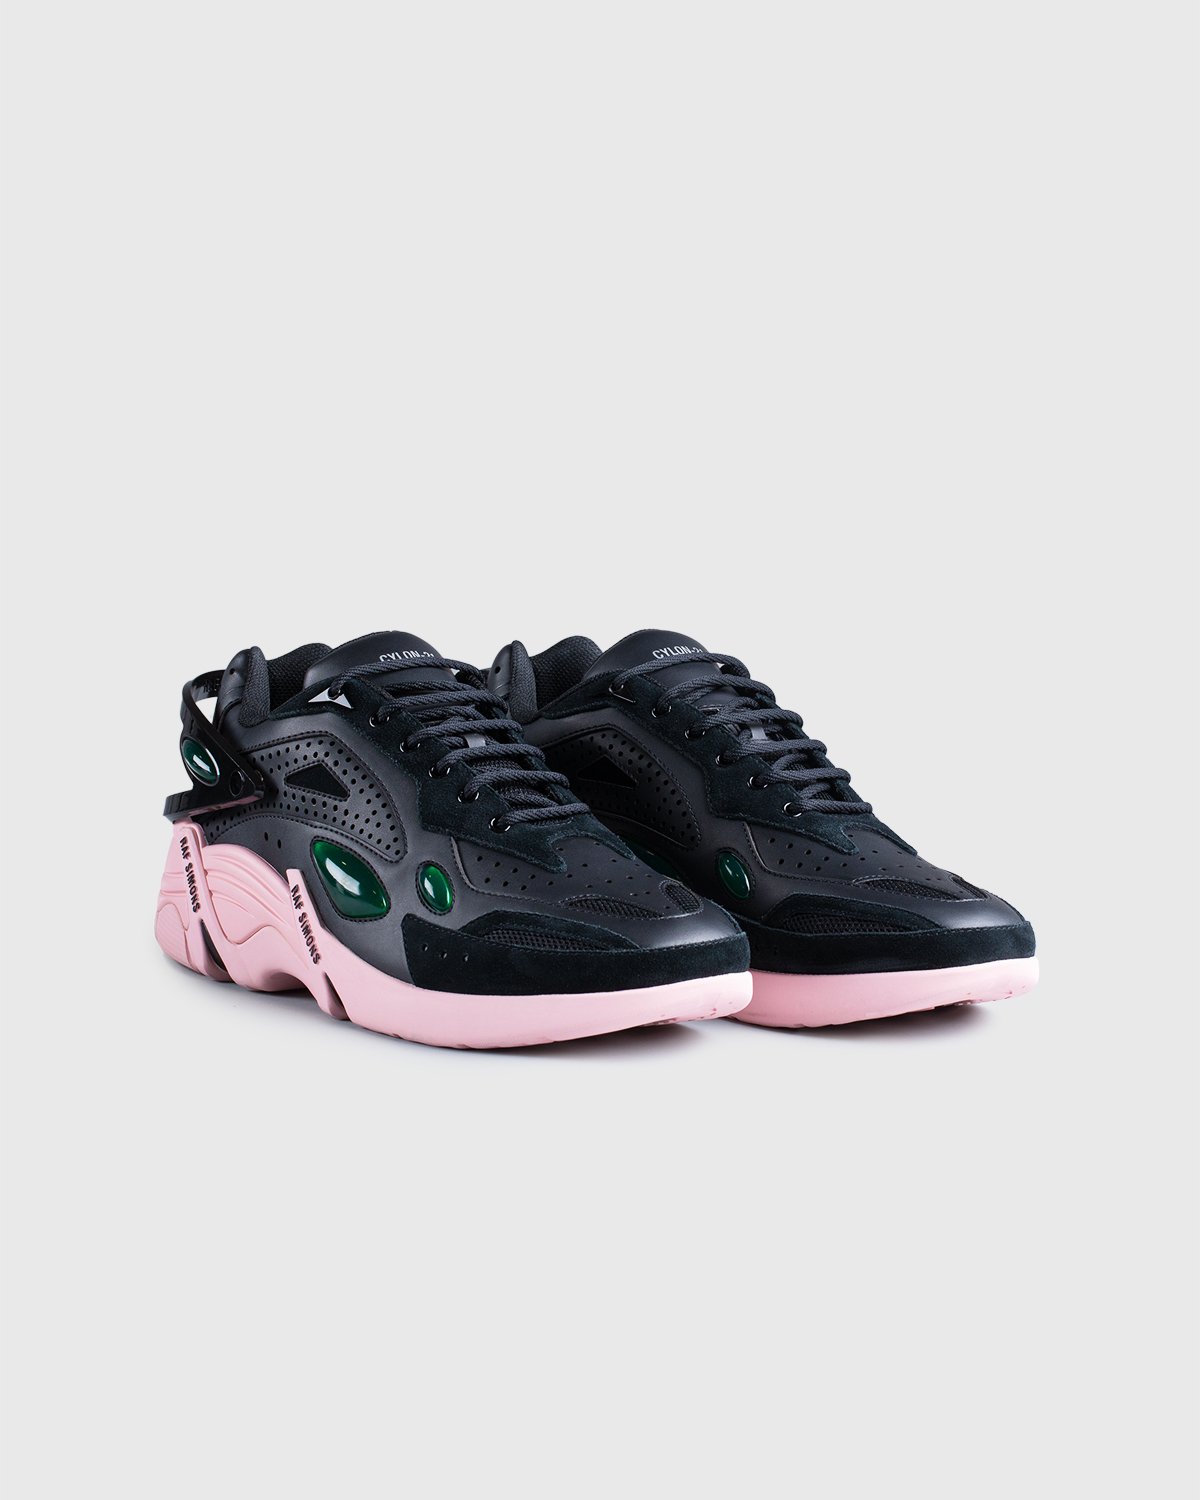 Raf Simons - Cylon Black/Pink - Footwear - Black - Image 3